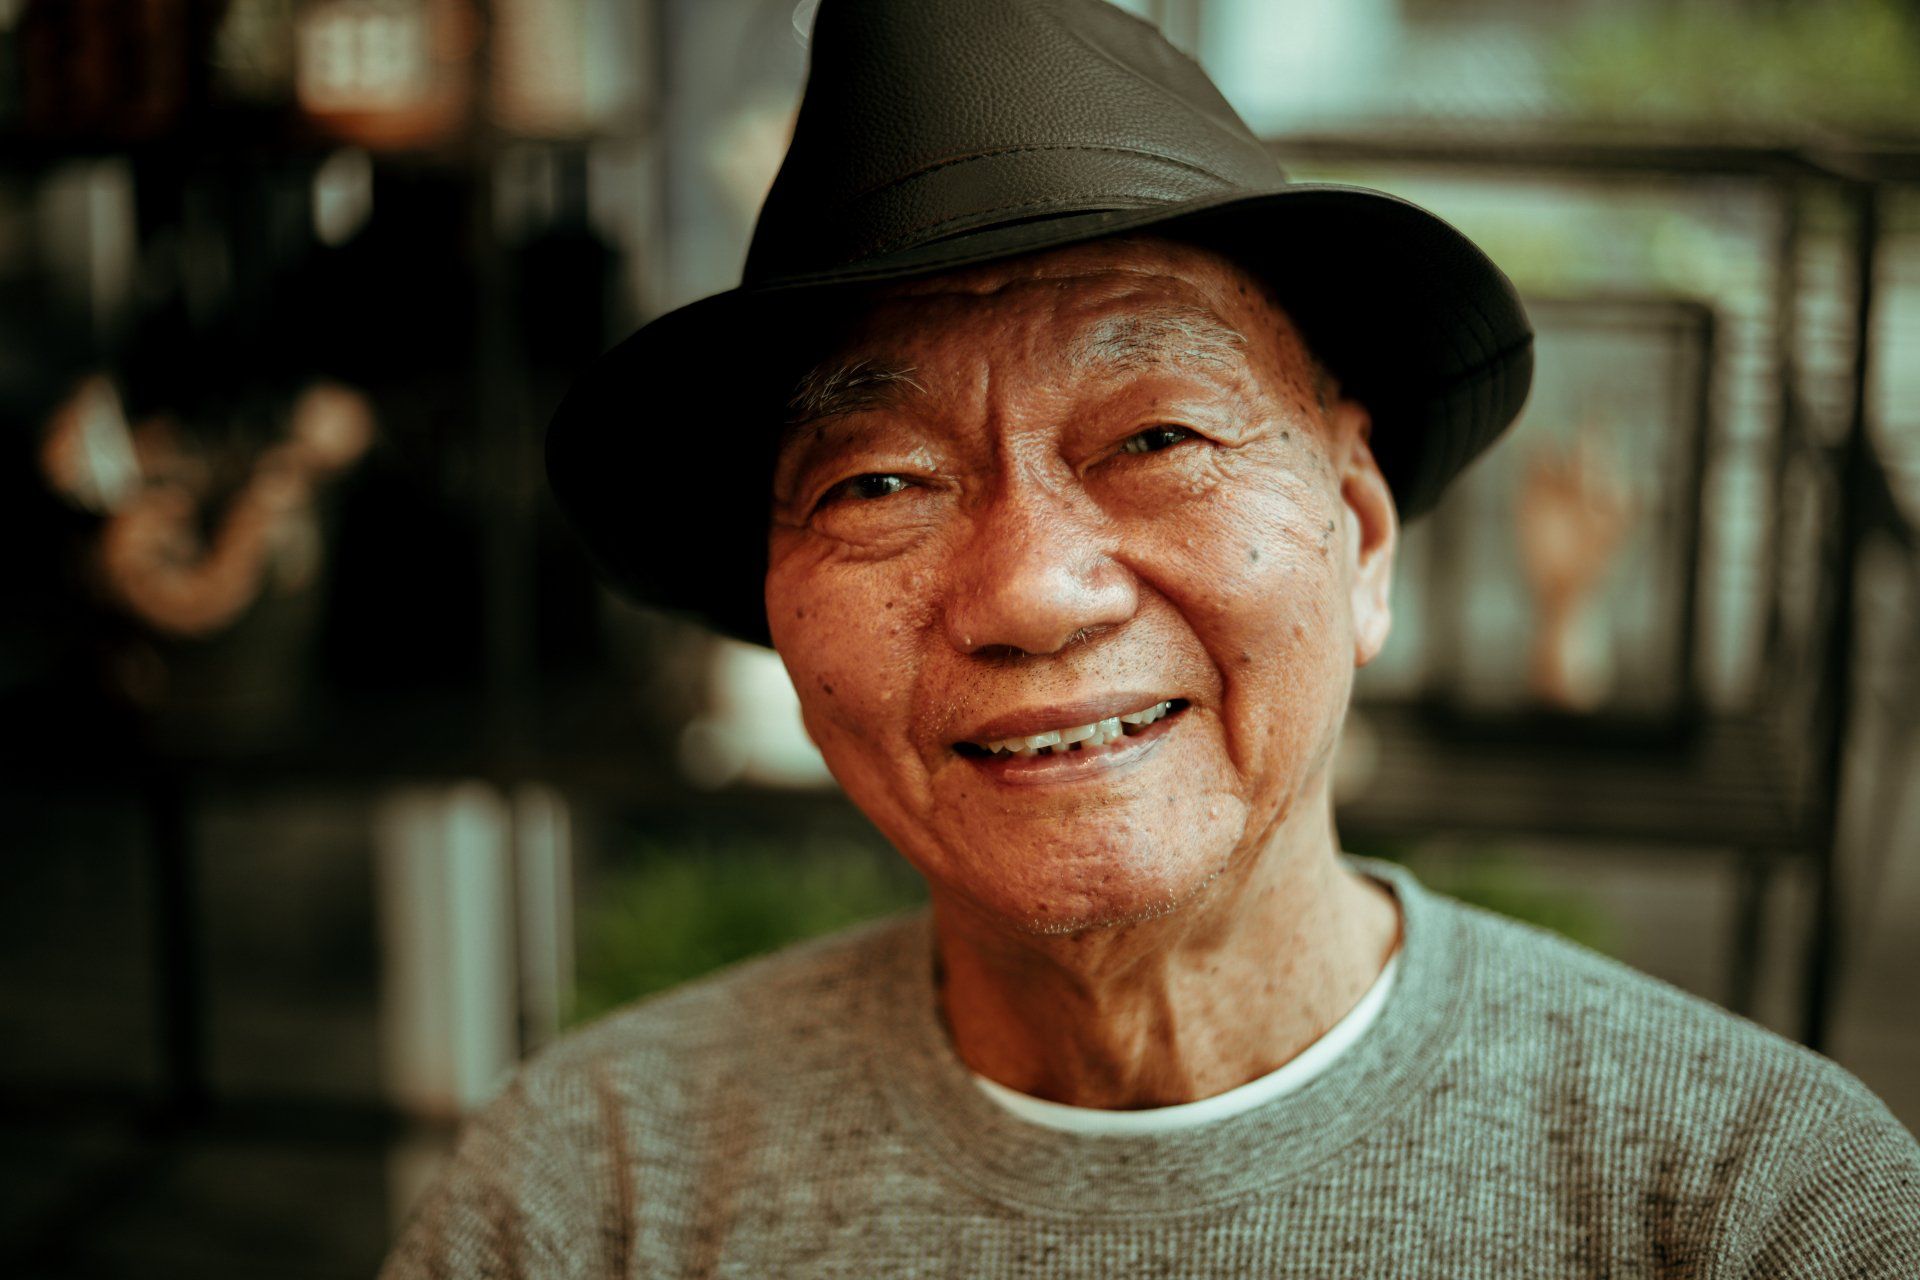 Elderly man in a bowler hat